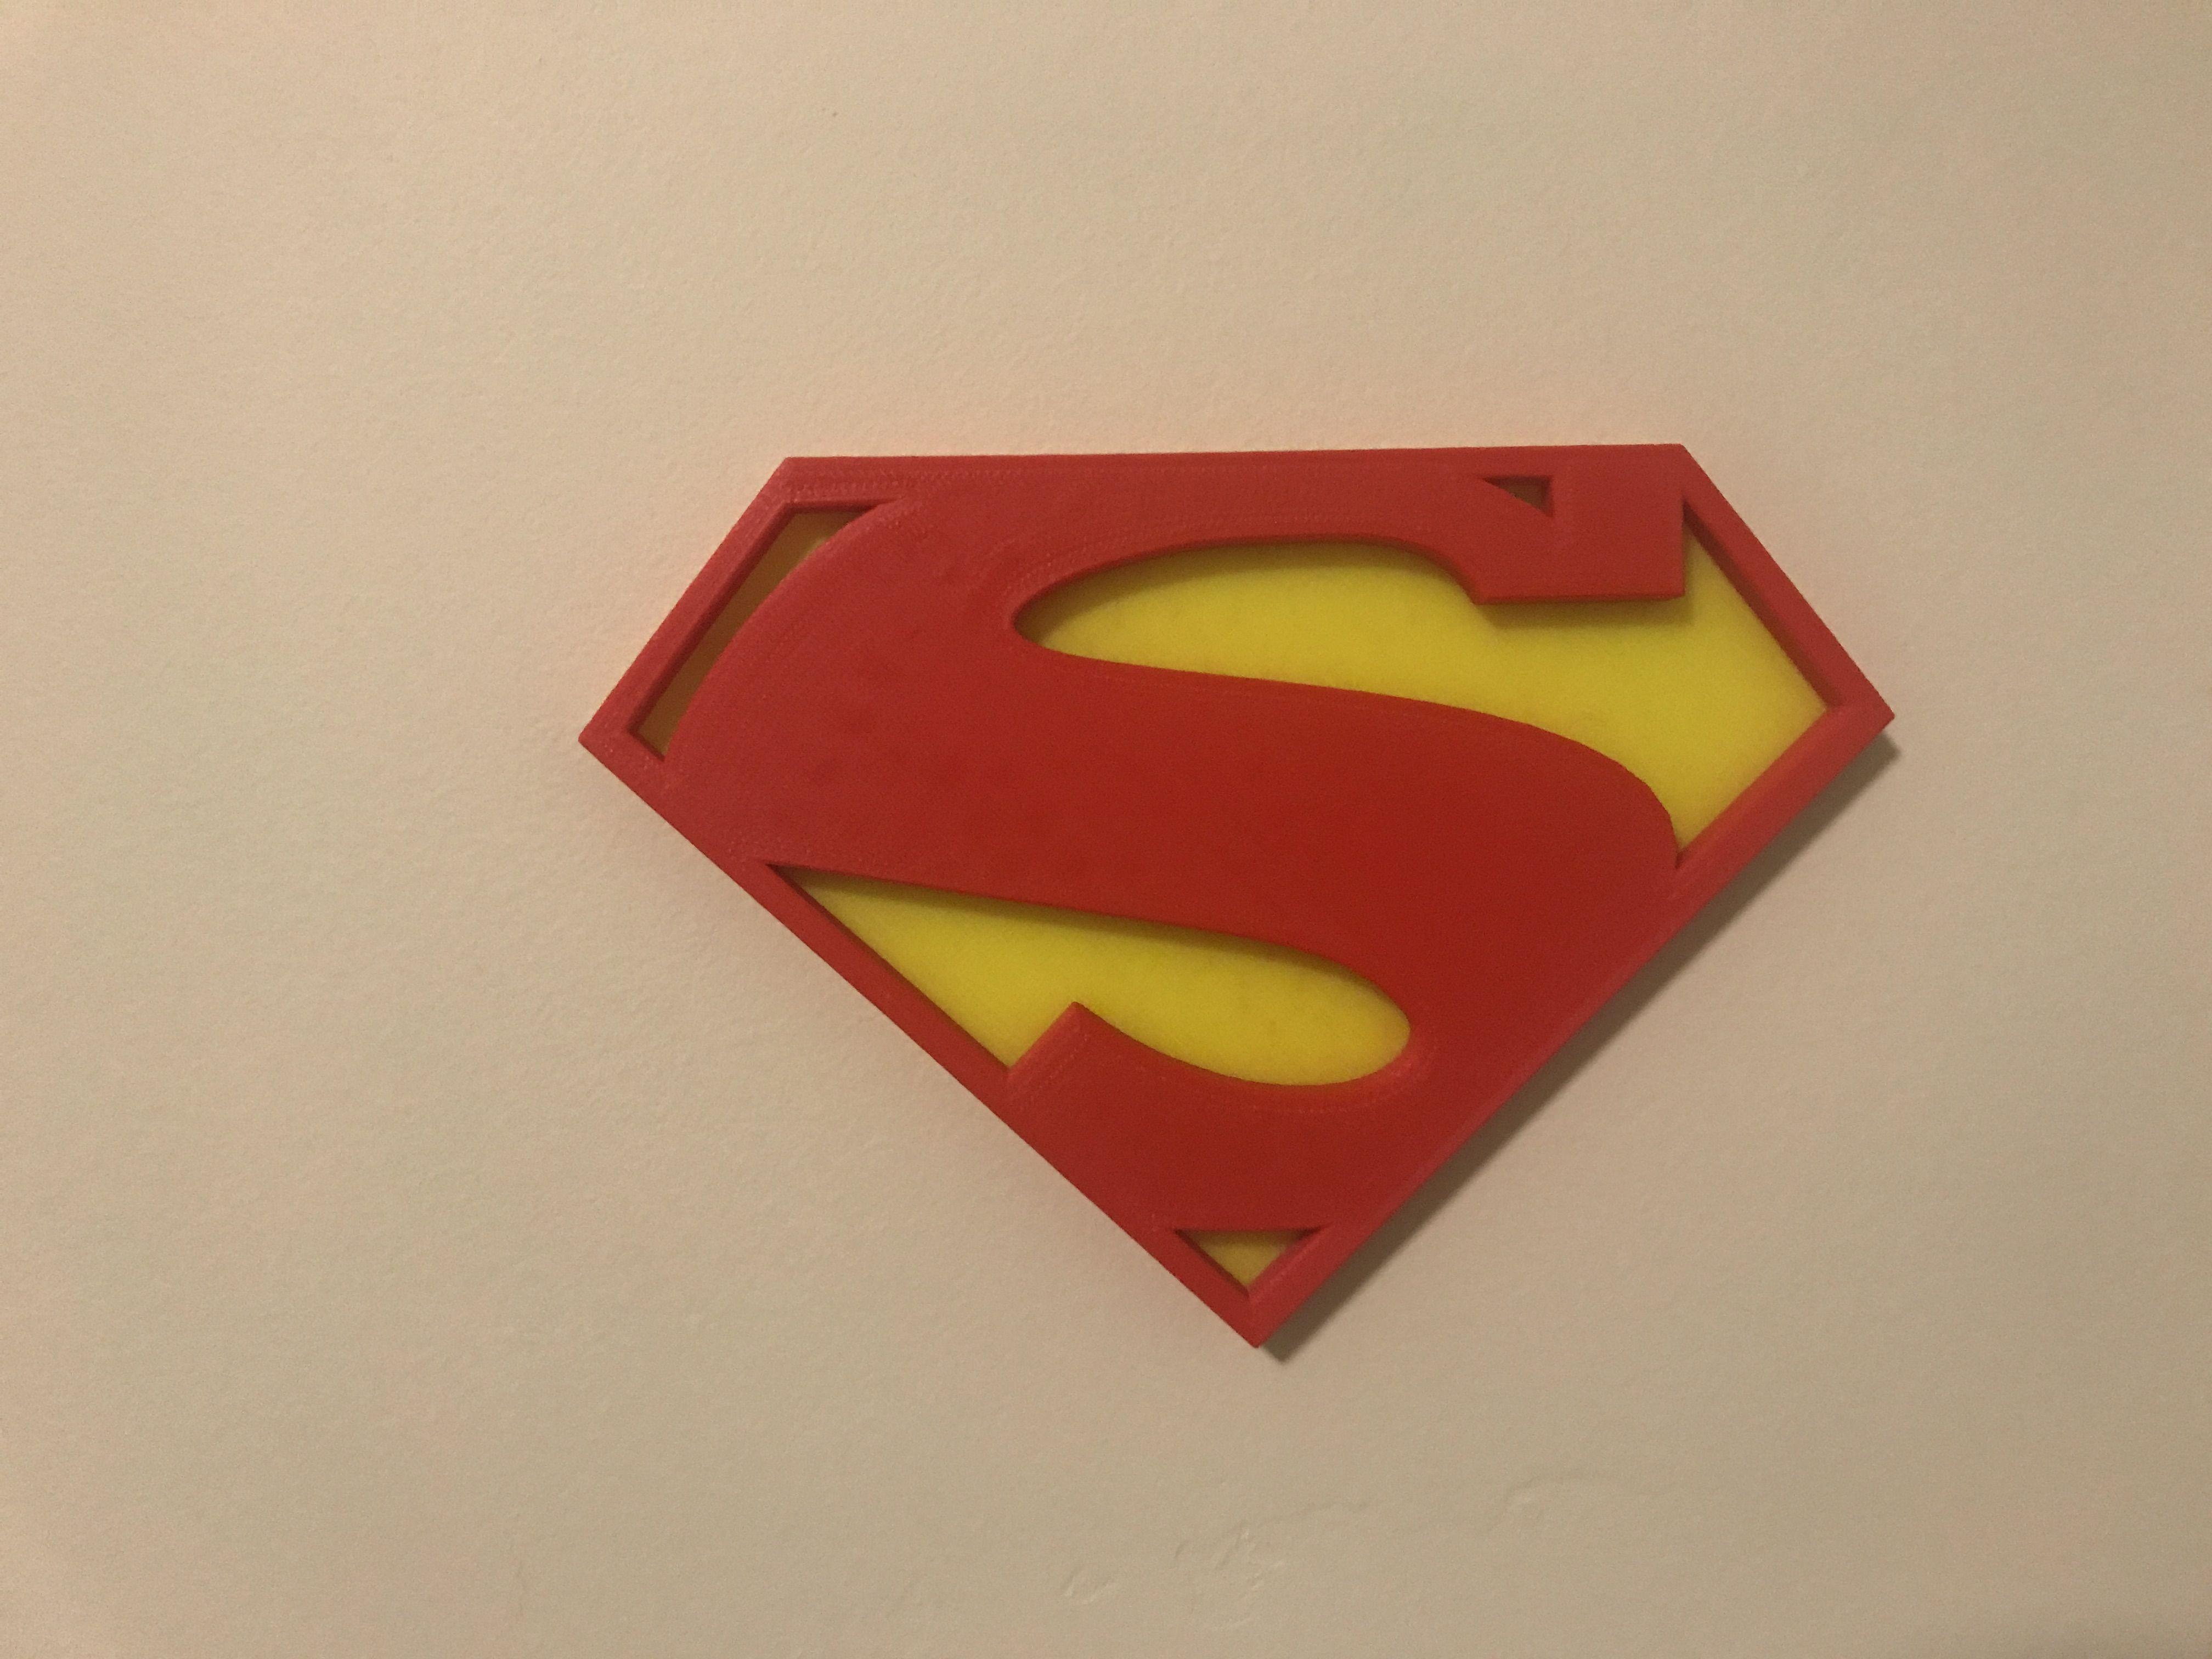 New 52 Superman Logo - Superman Logo (New 52) by Zorn88 - Thingiverse